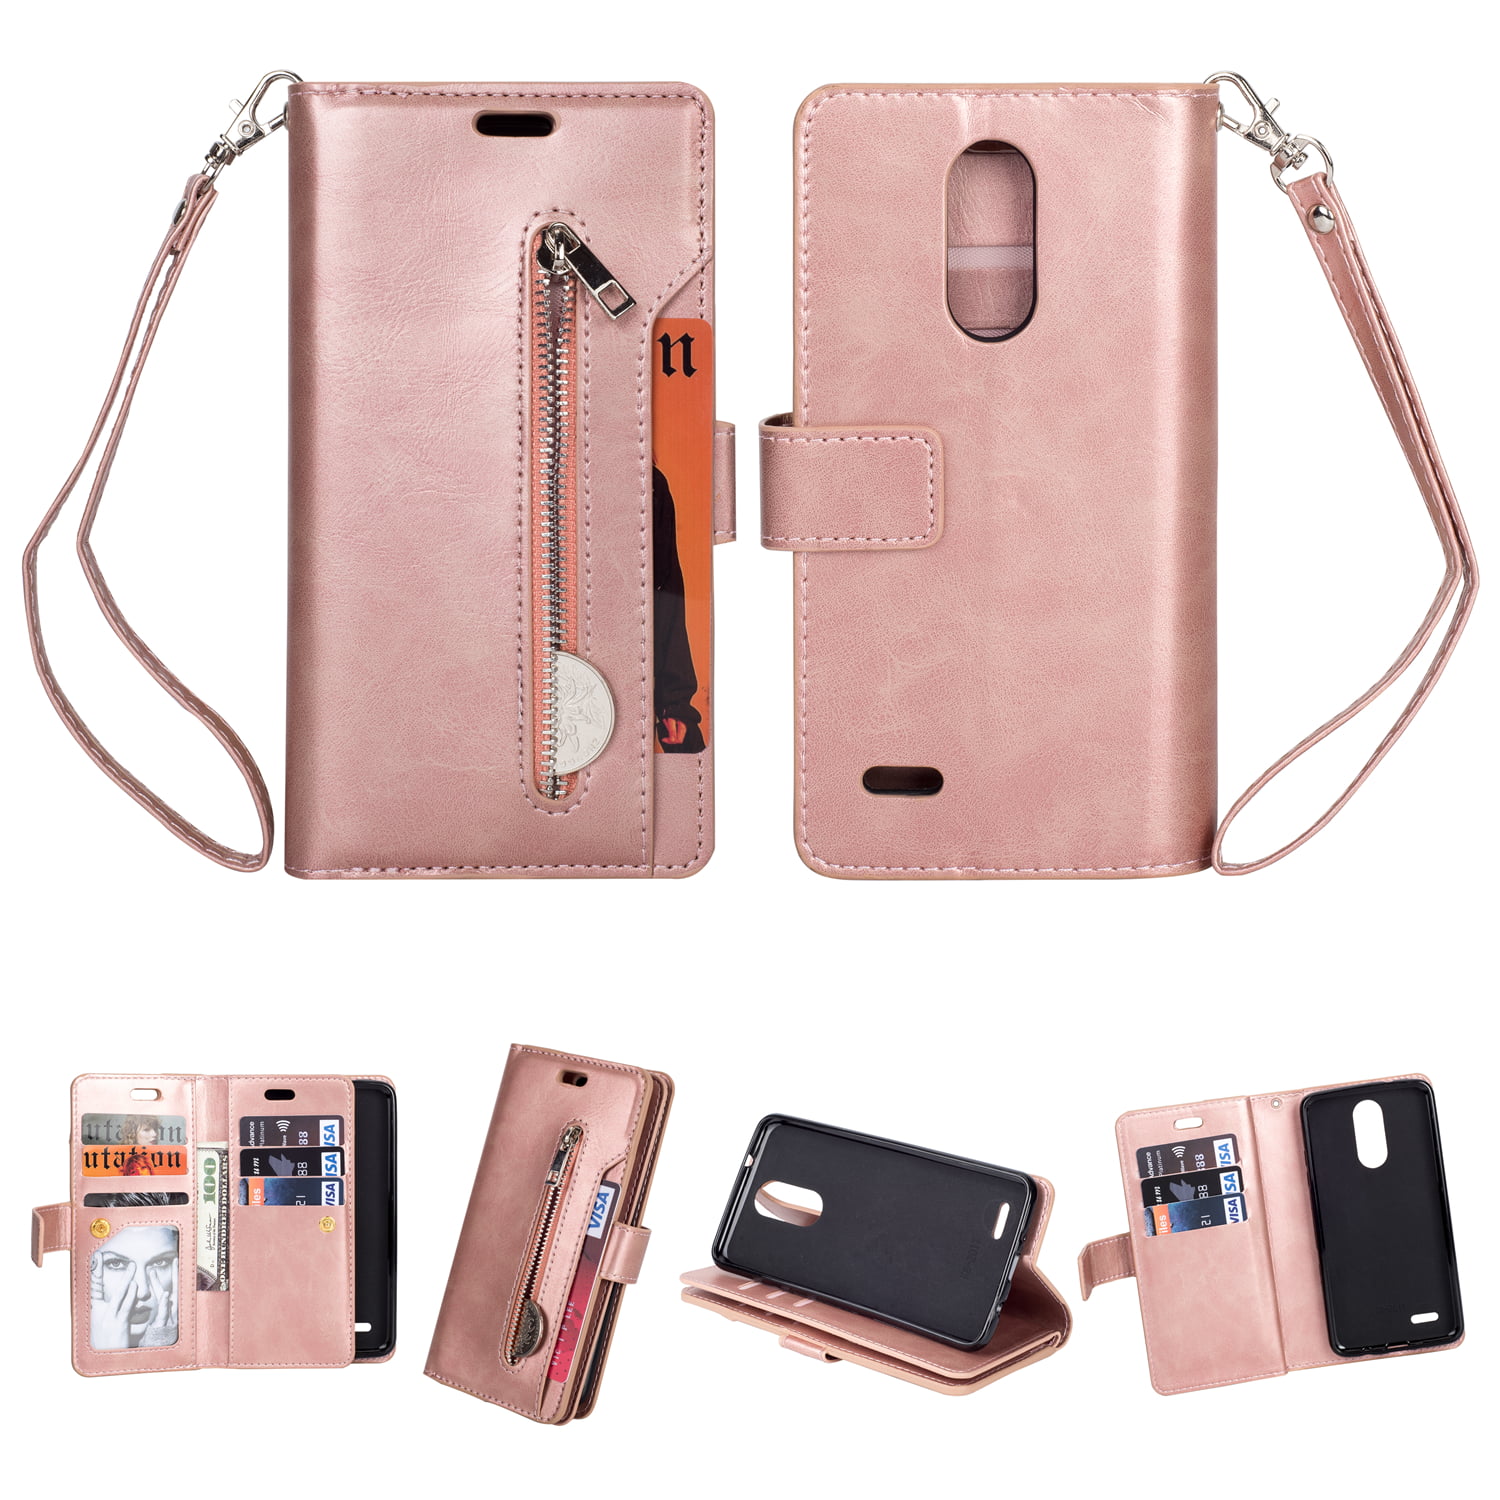 LG K10 2017 LG K20 Plus Case,LG Harmony/LG K20 LG LV5 Wallet Case,Printed Design PU Leather Phone Protective Case Cover with Card Holder Slot Pocket Magnetic for LG K20 V,Rose Butterfly 